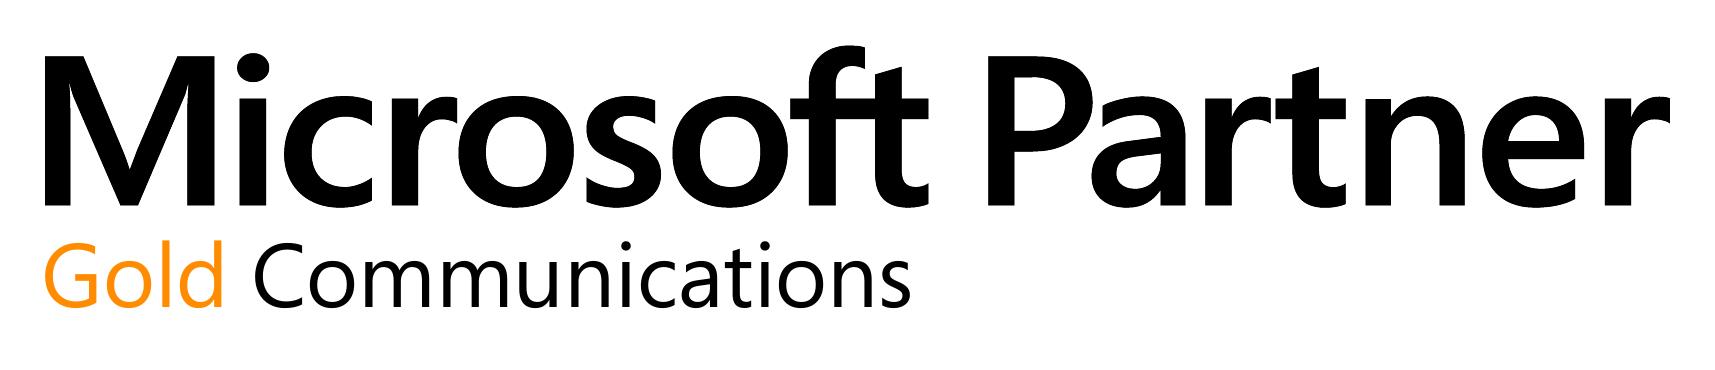 UnifiedCommunications.com is a Microsoft Gold Communications Partner